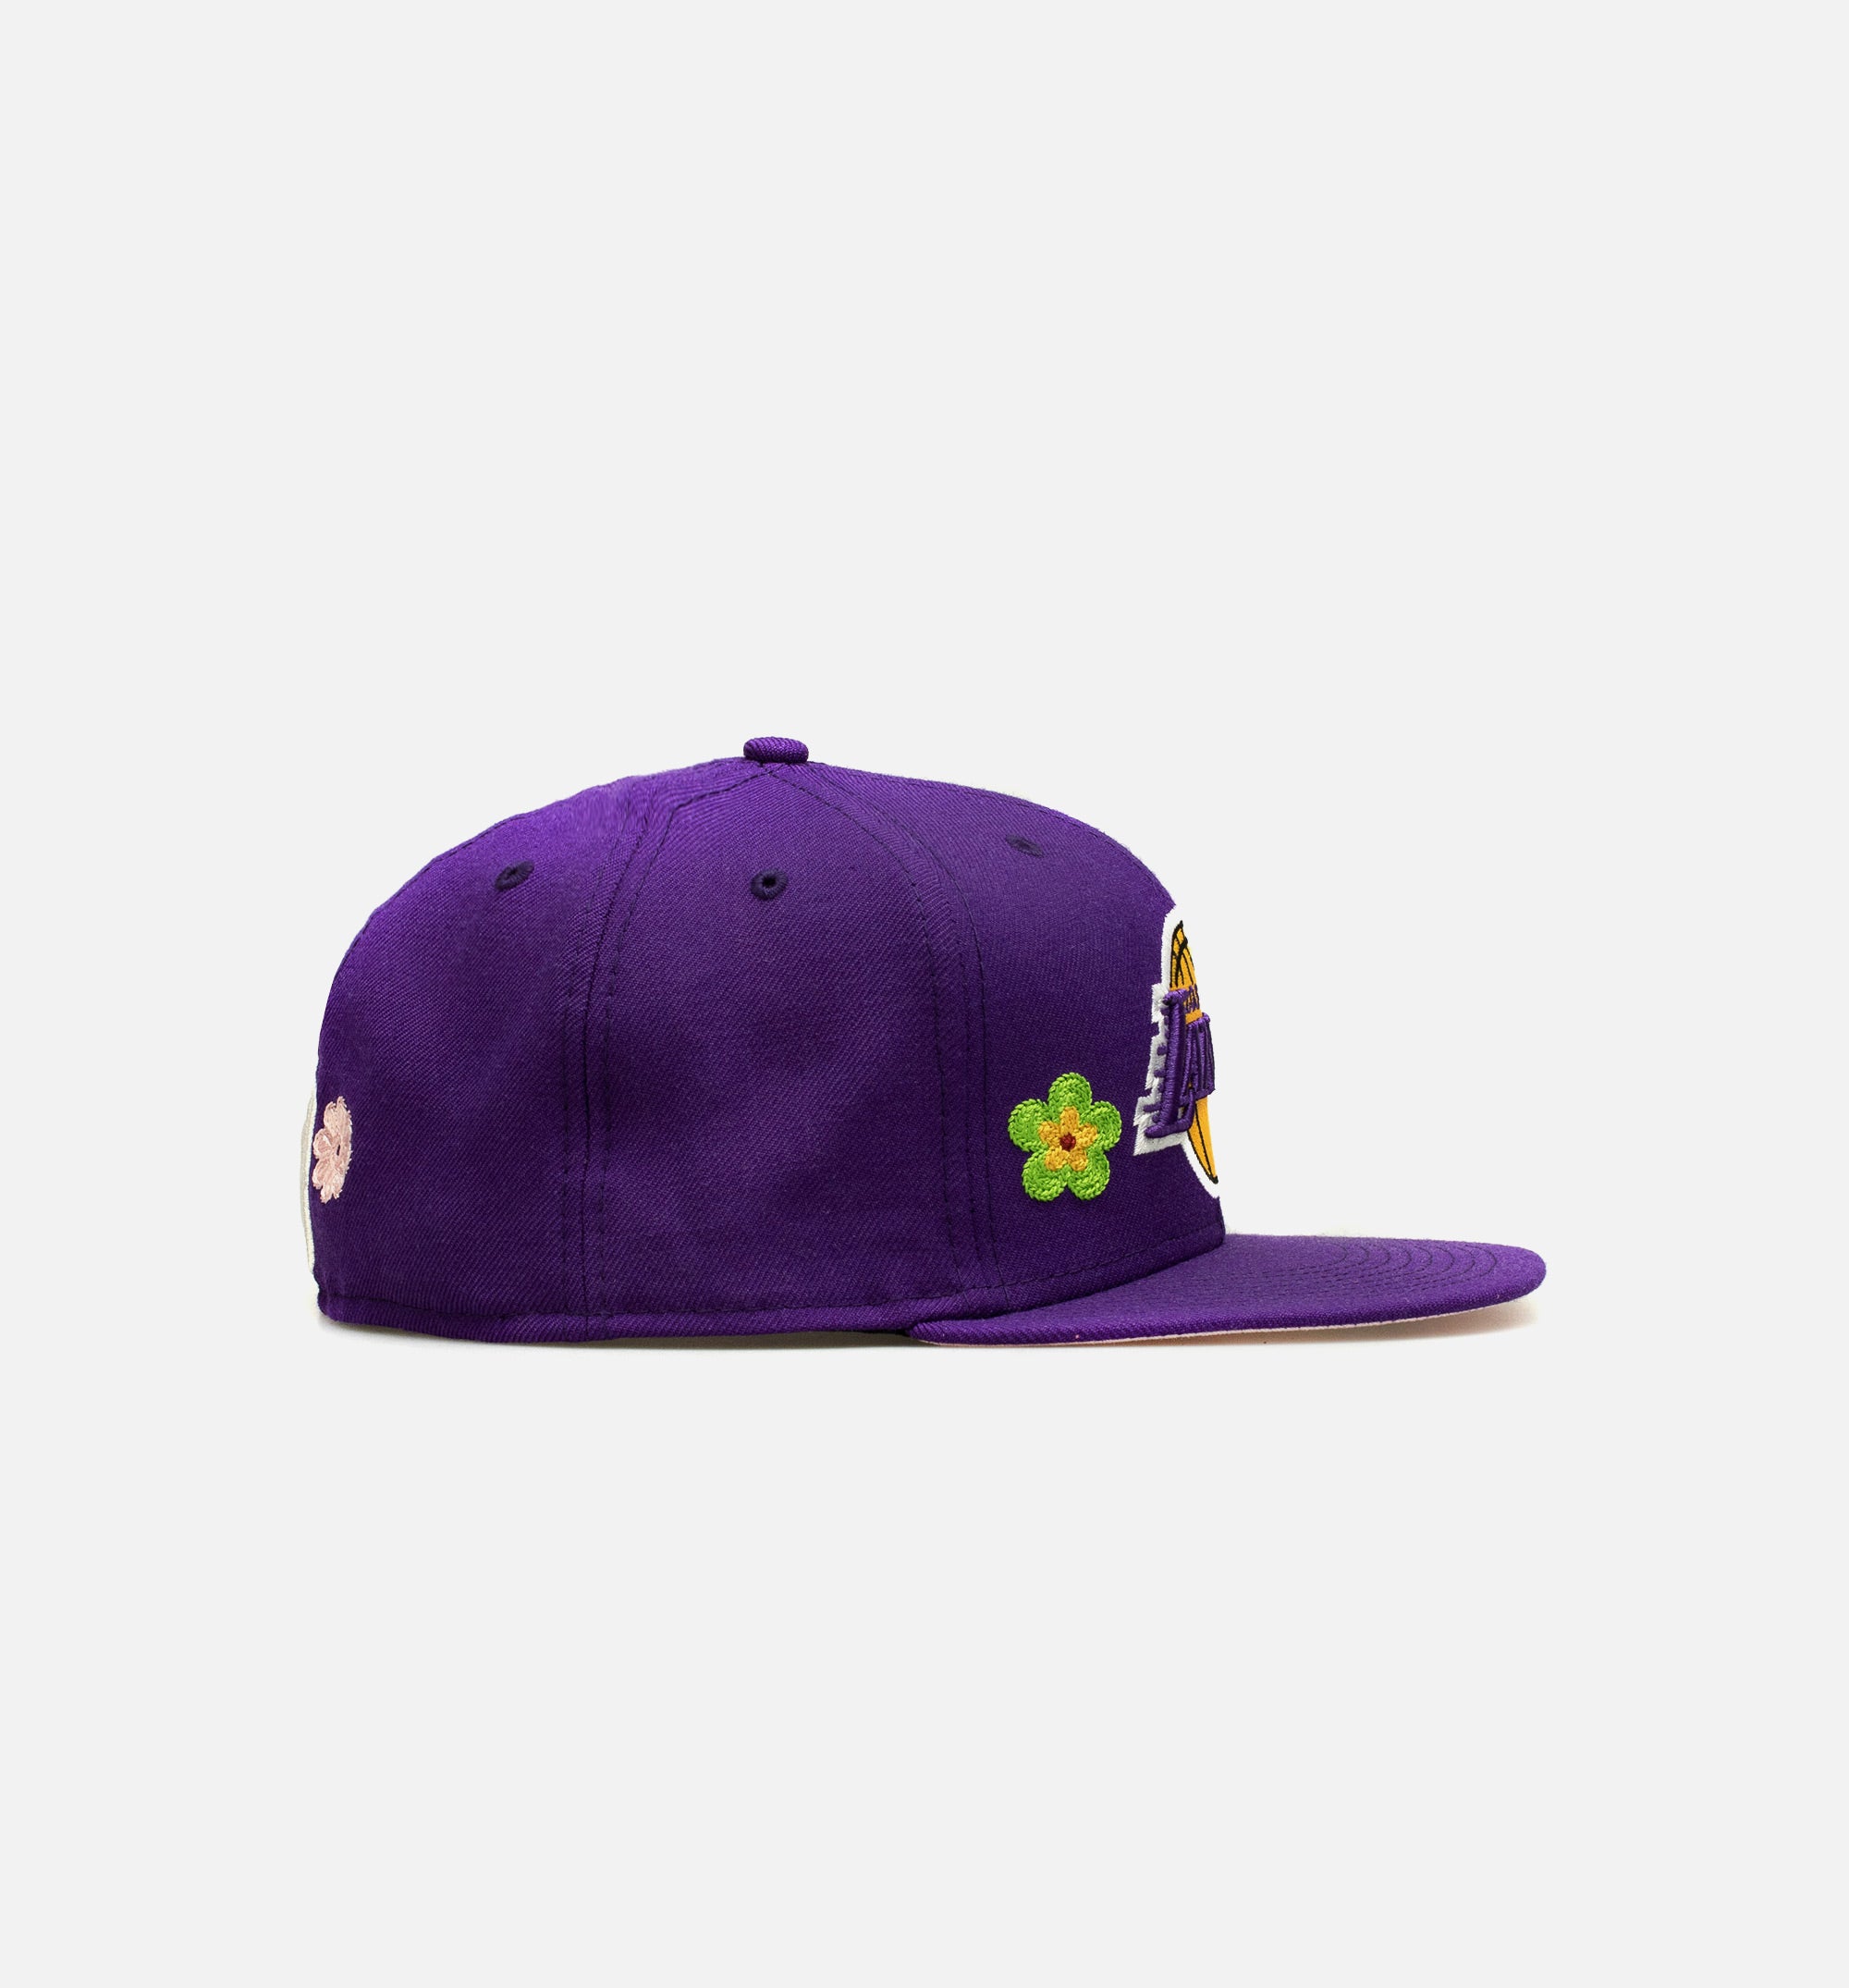 New Era, Accessories, New Era 9fifty Floral Hawaiian La Lakers Hat